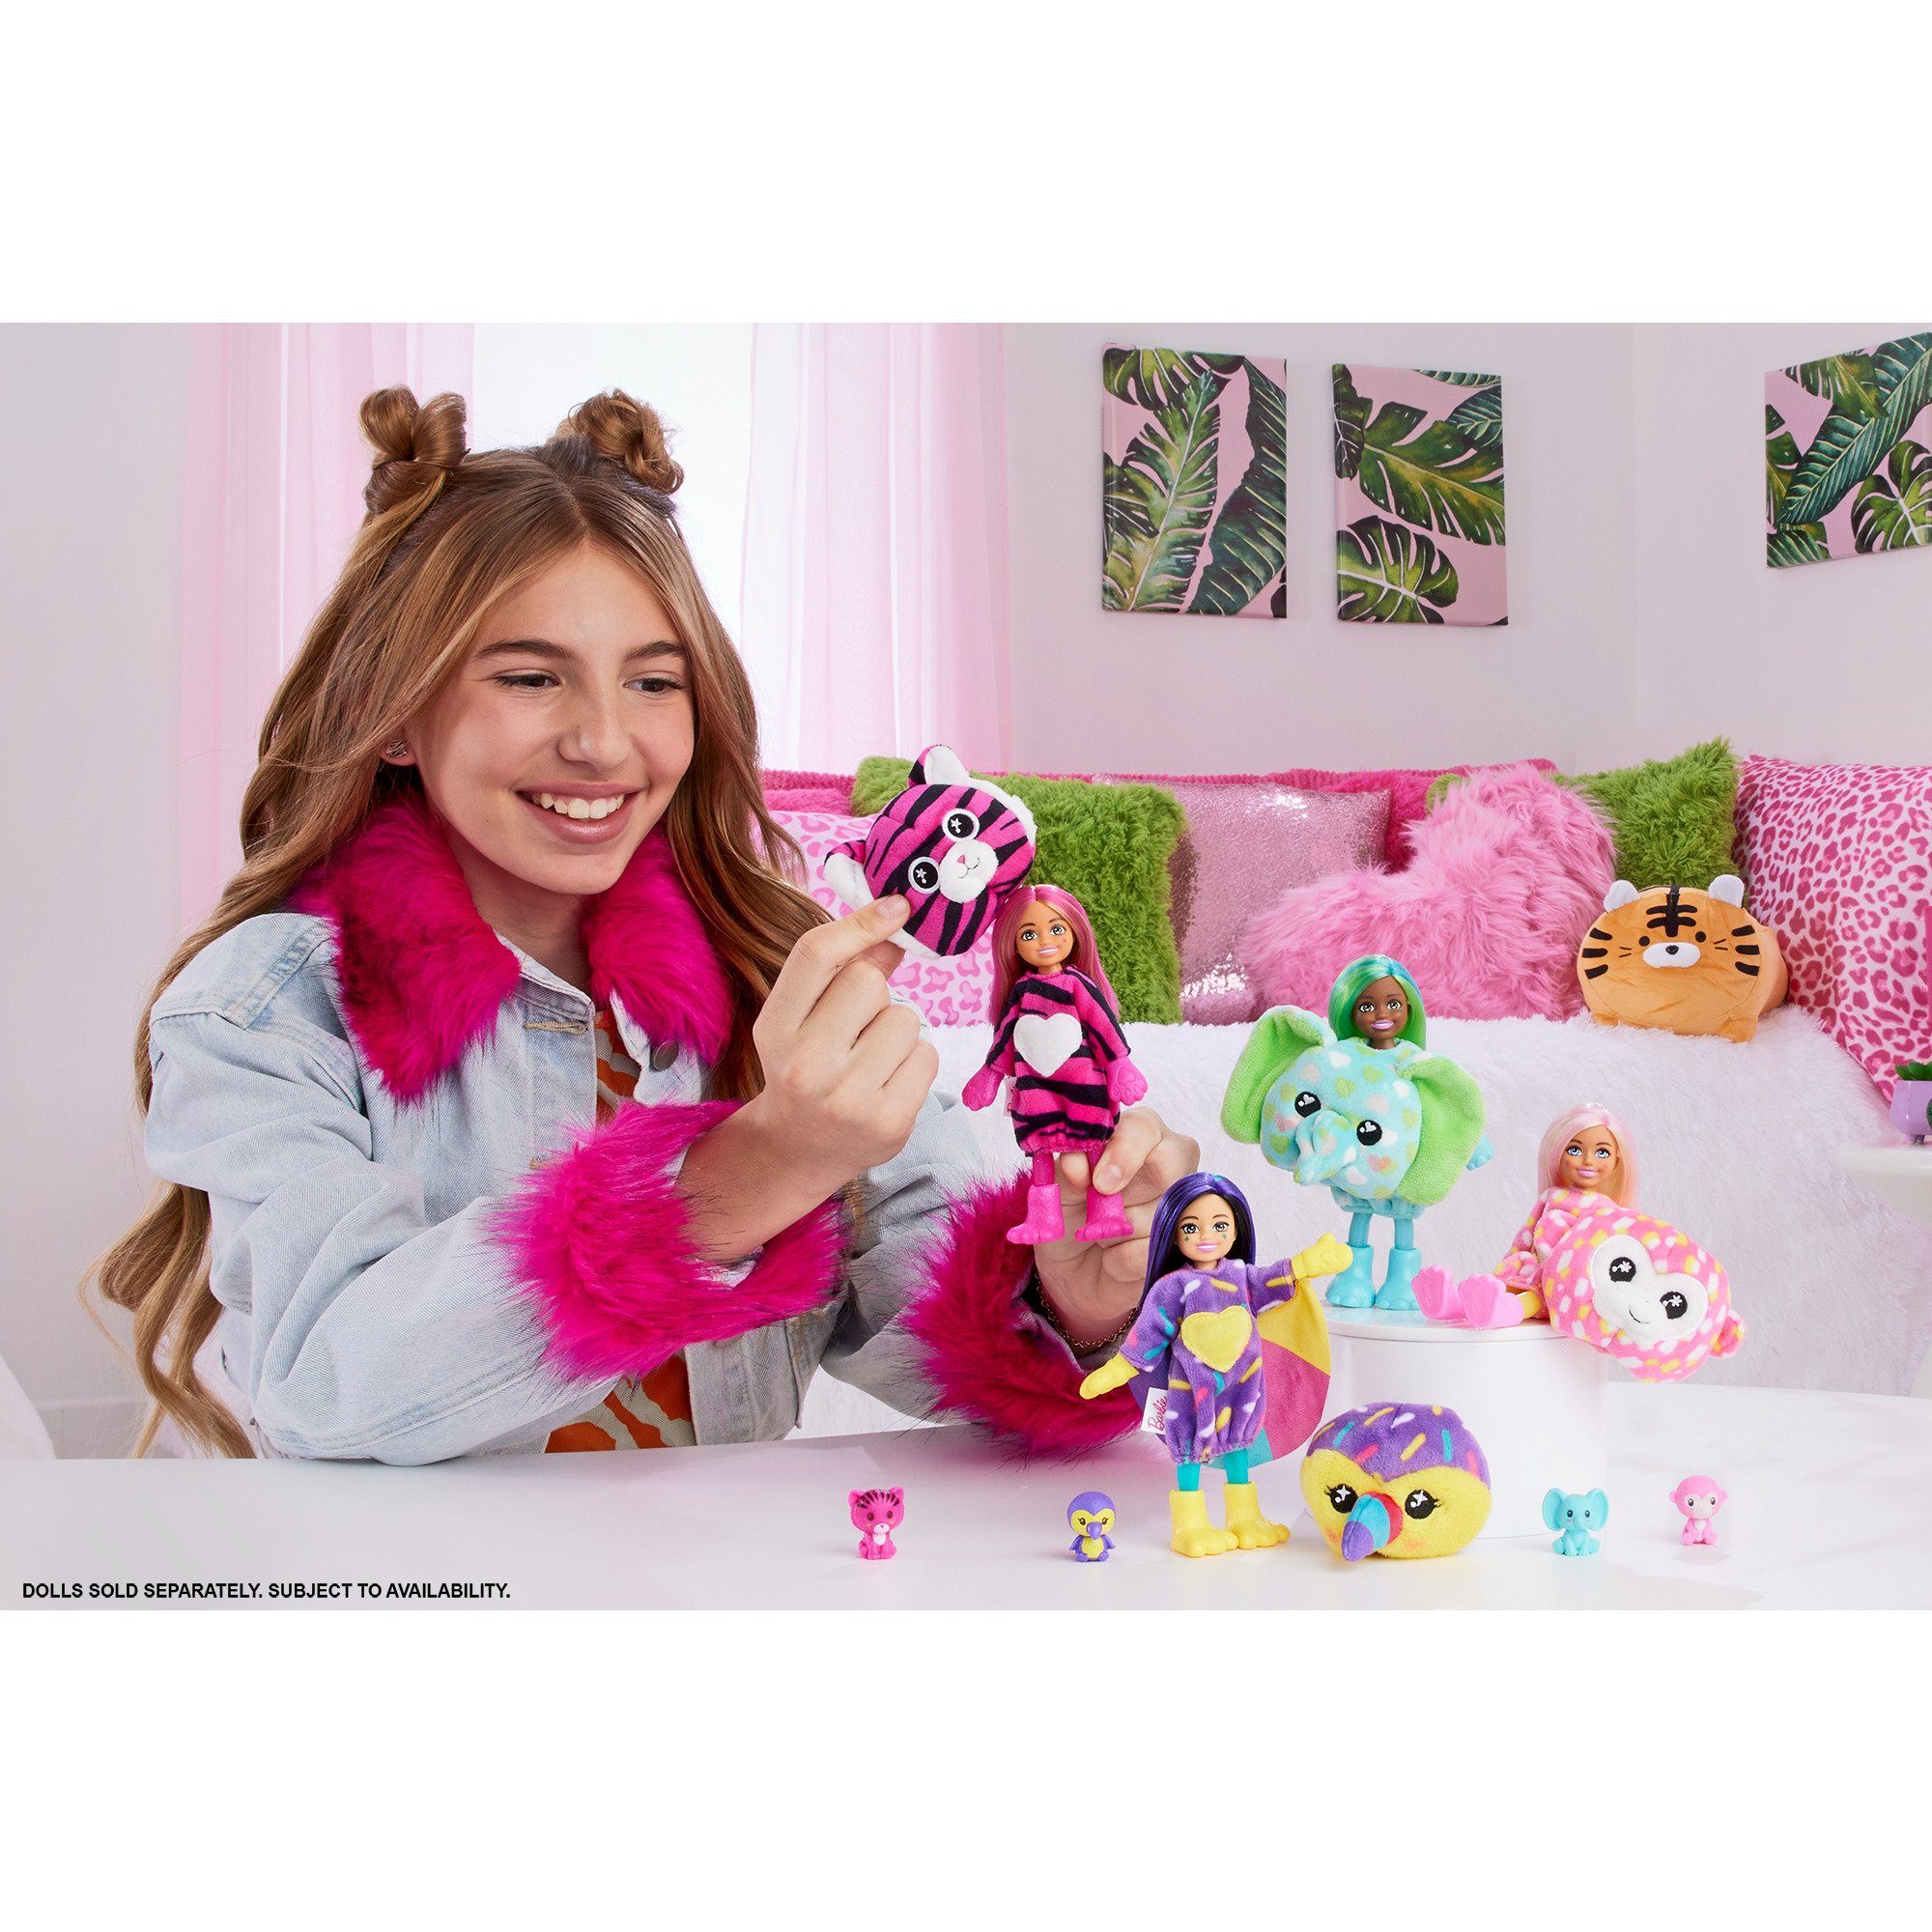 Chelsea Series Jungle - Cutie Barbie Barbie Reveal Mattel® Babypuppe